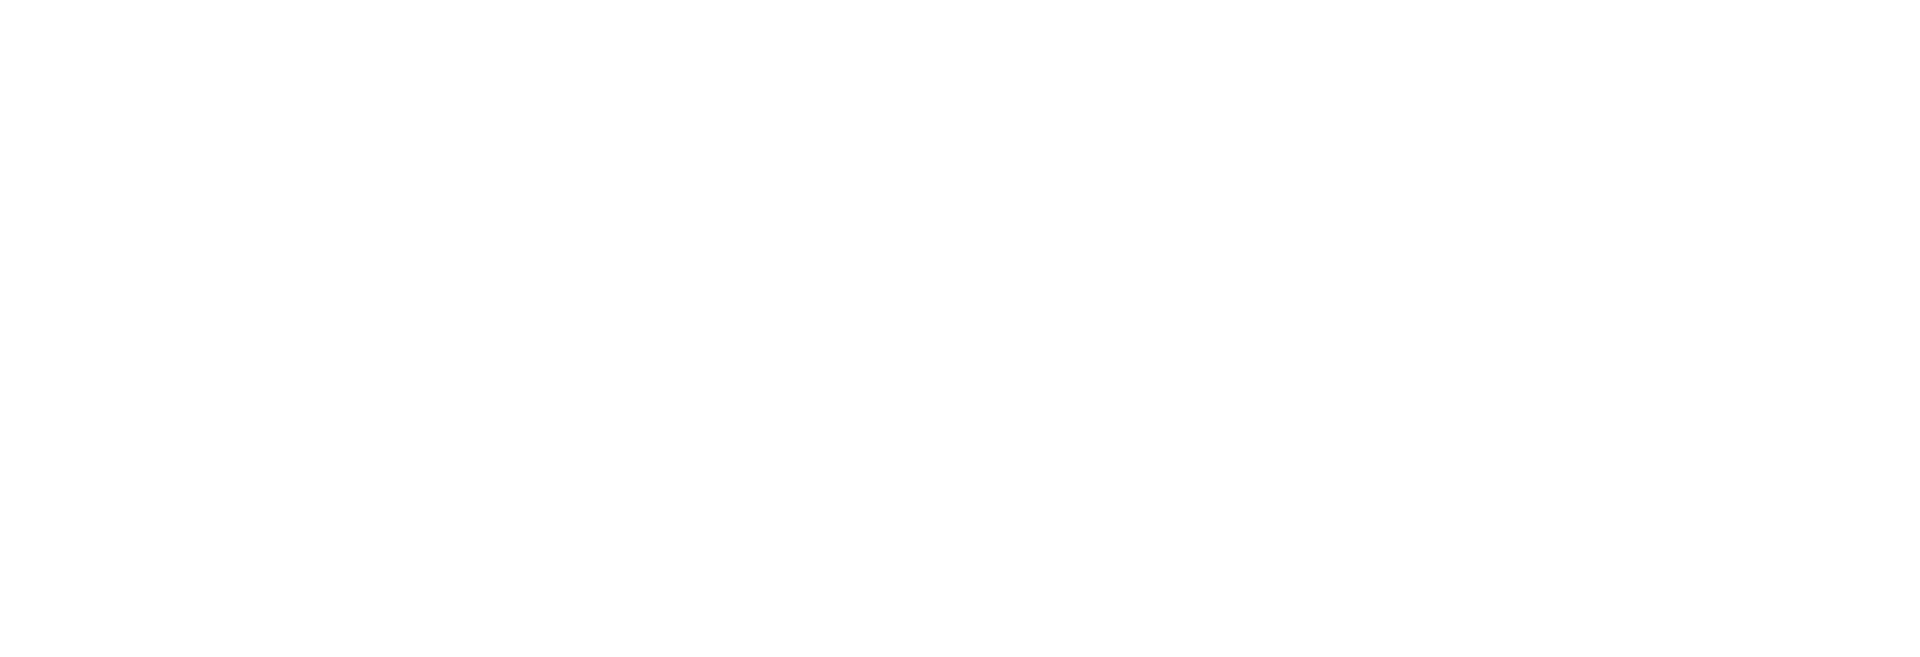 Penn State Smeal Magazine